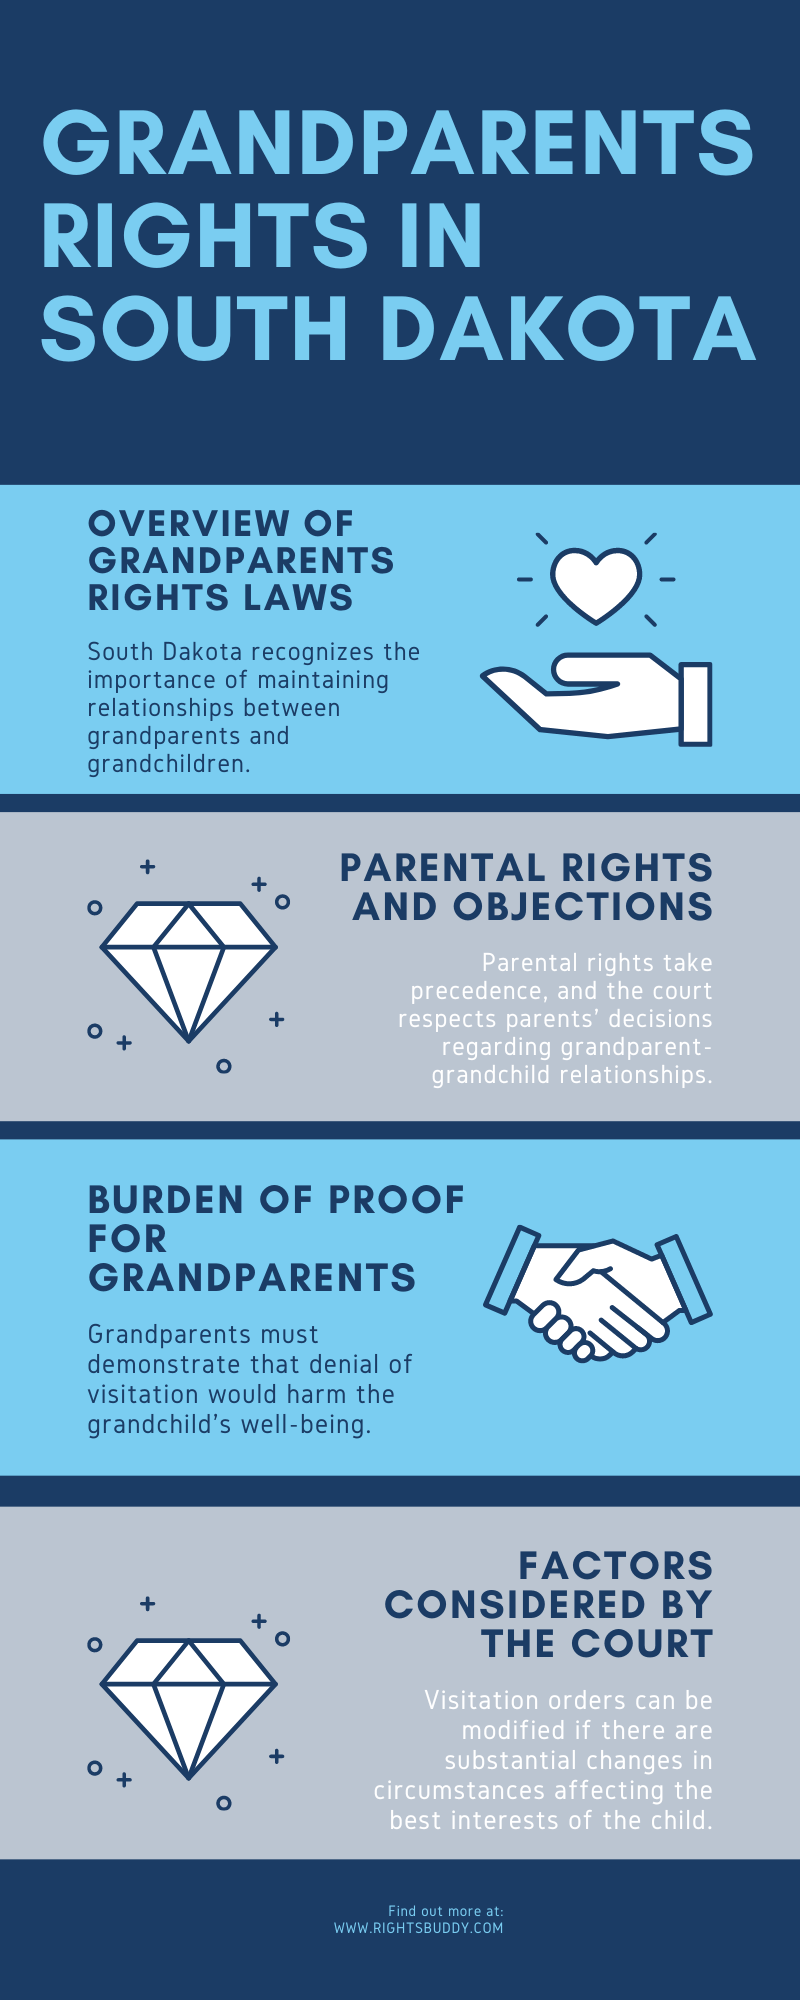 Grandparents Rights in South Dakota